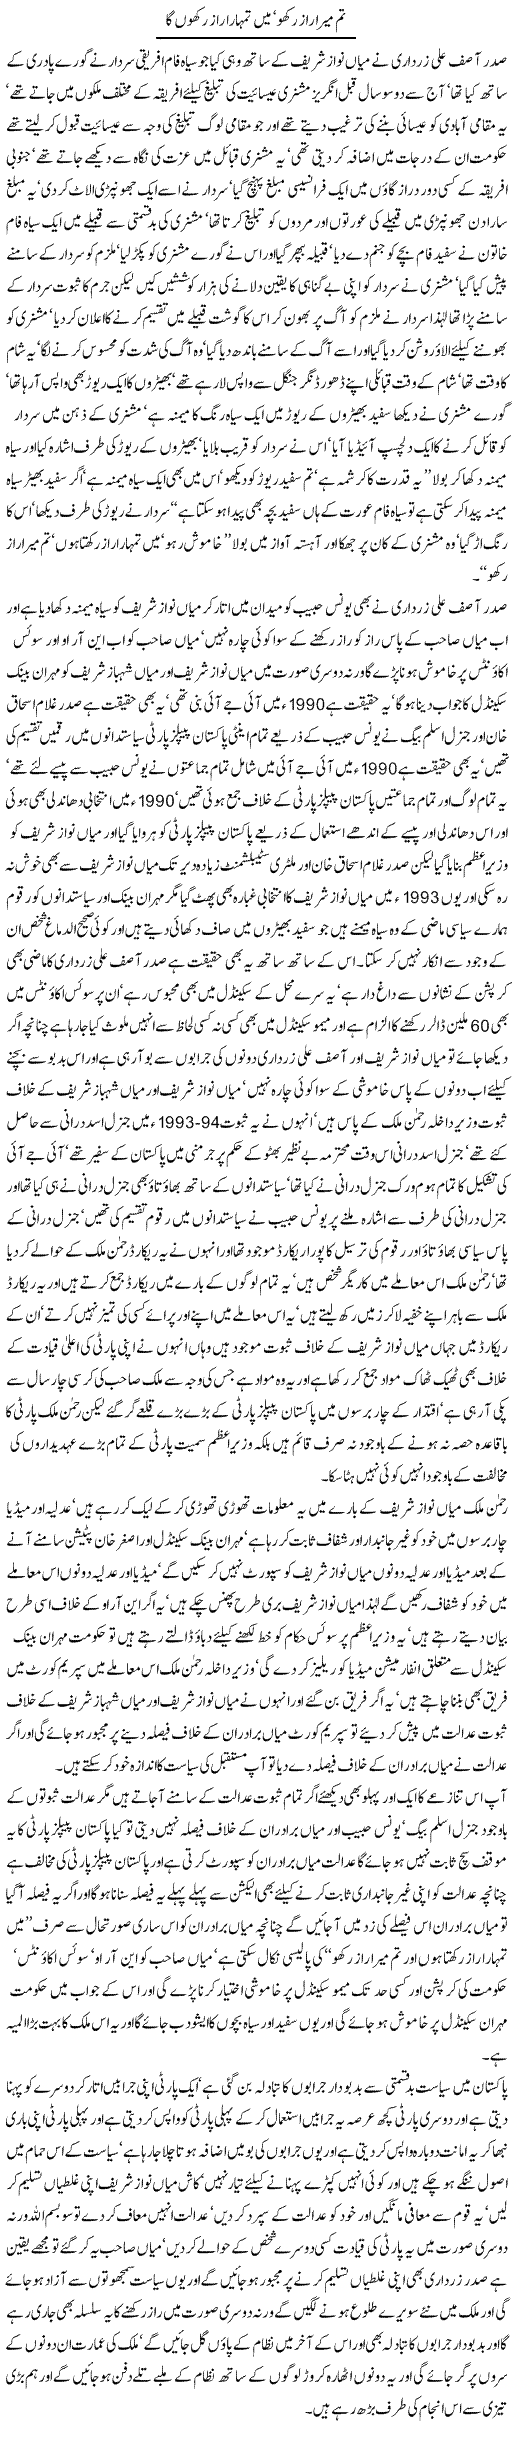 Zardari Corruption Express Column Javed Chaudhry 13 March 2012